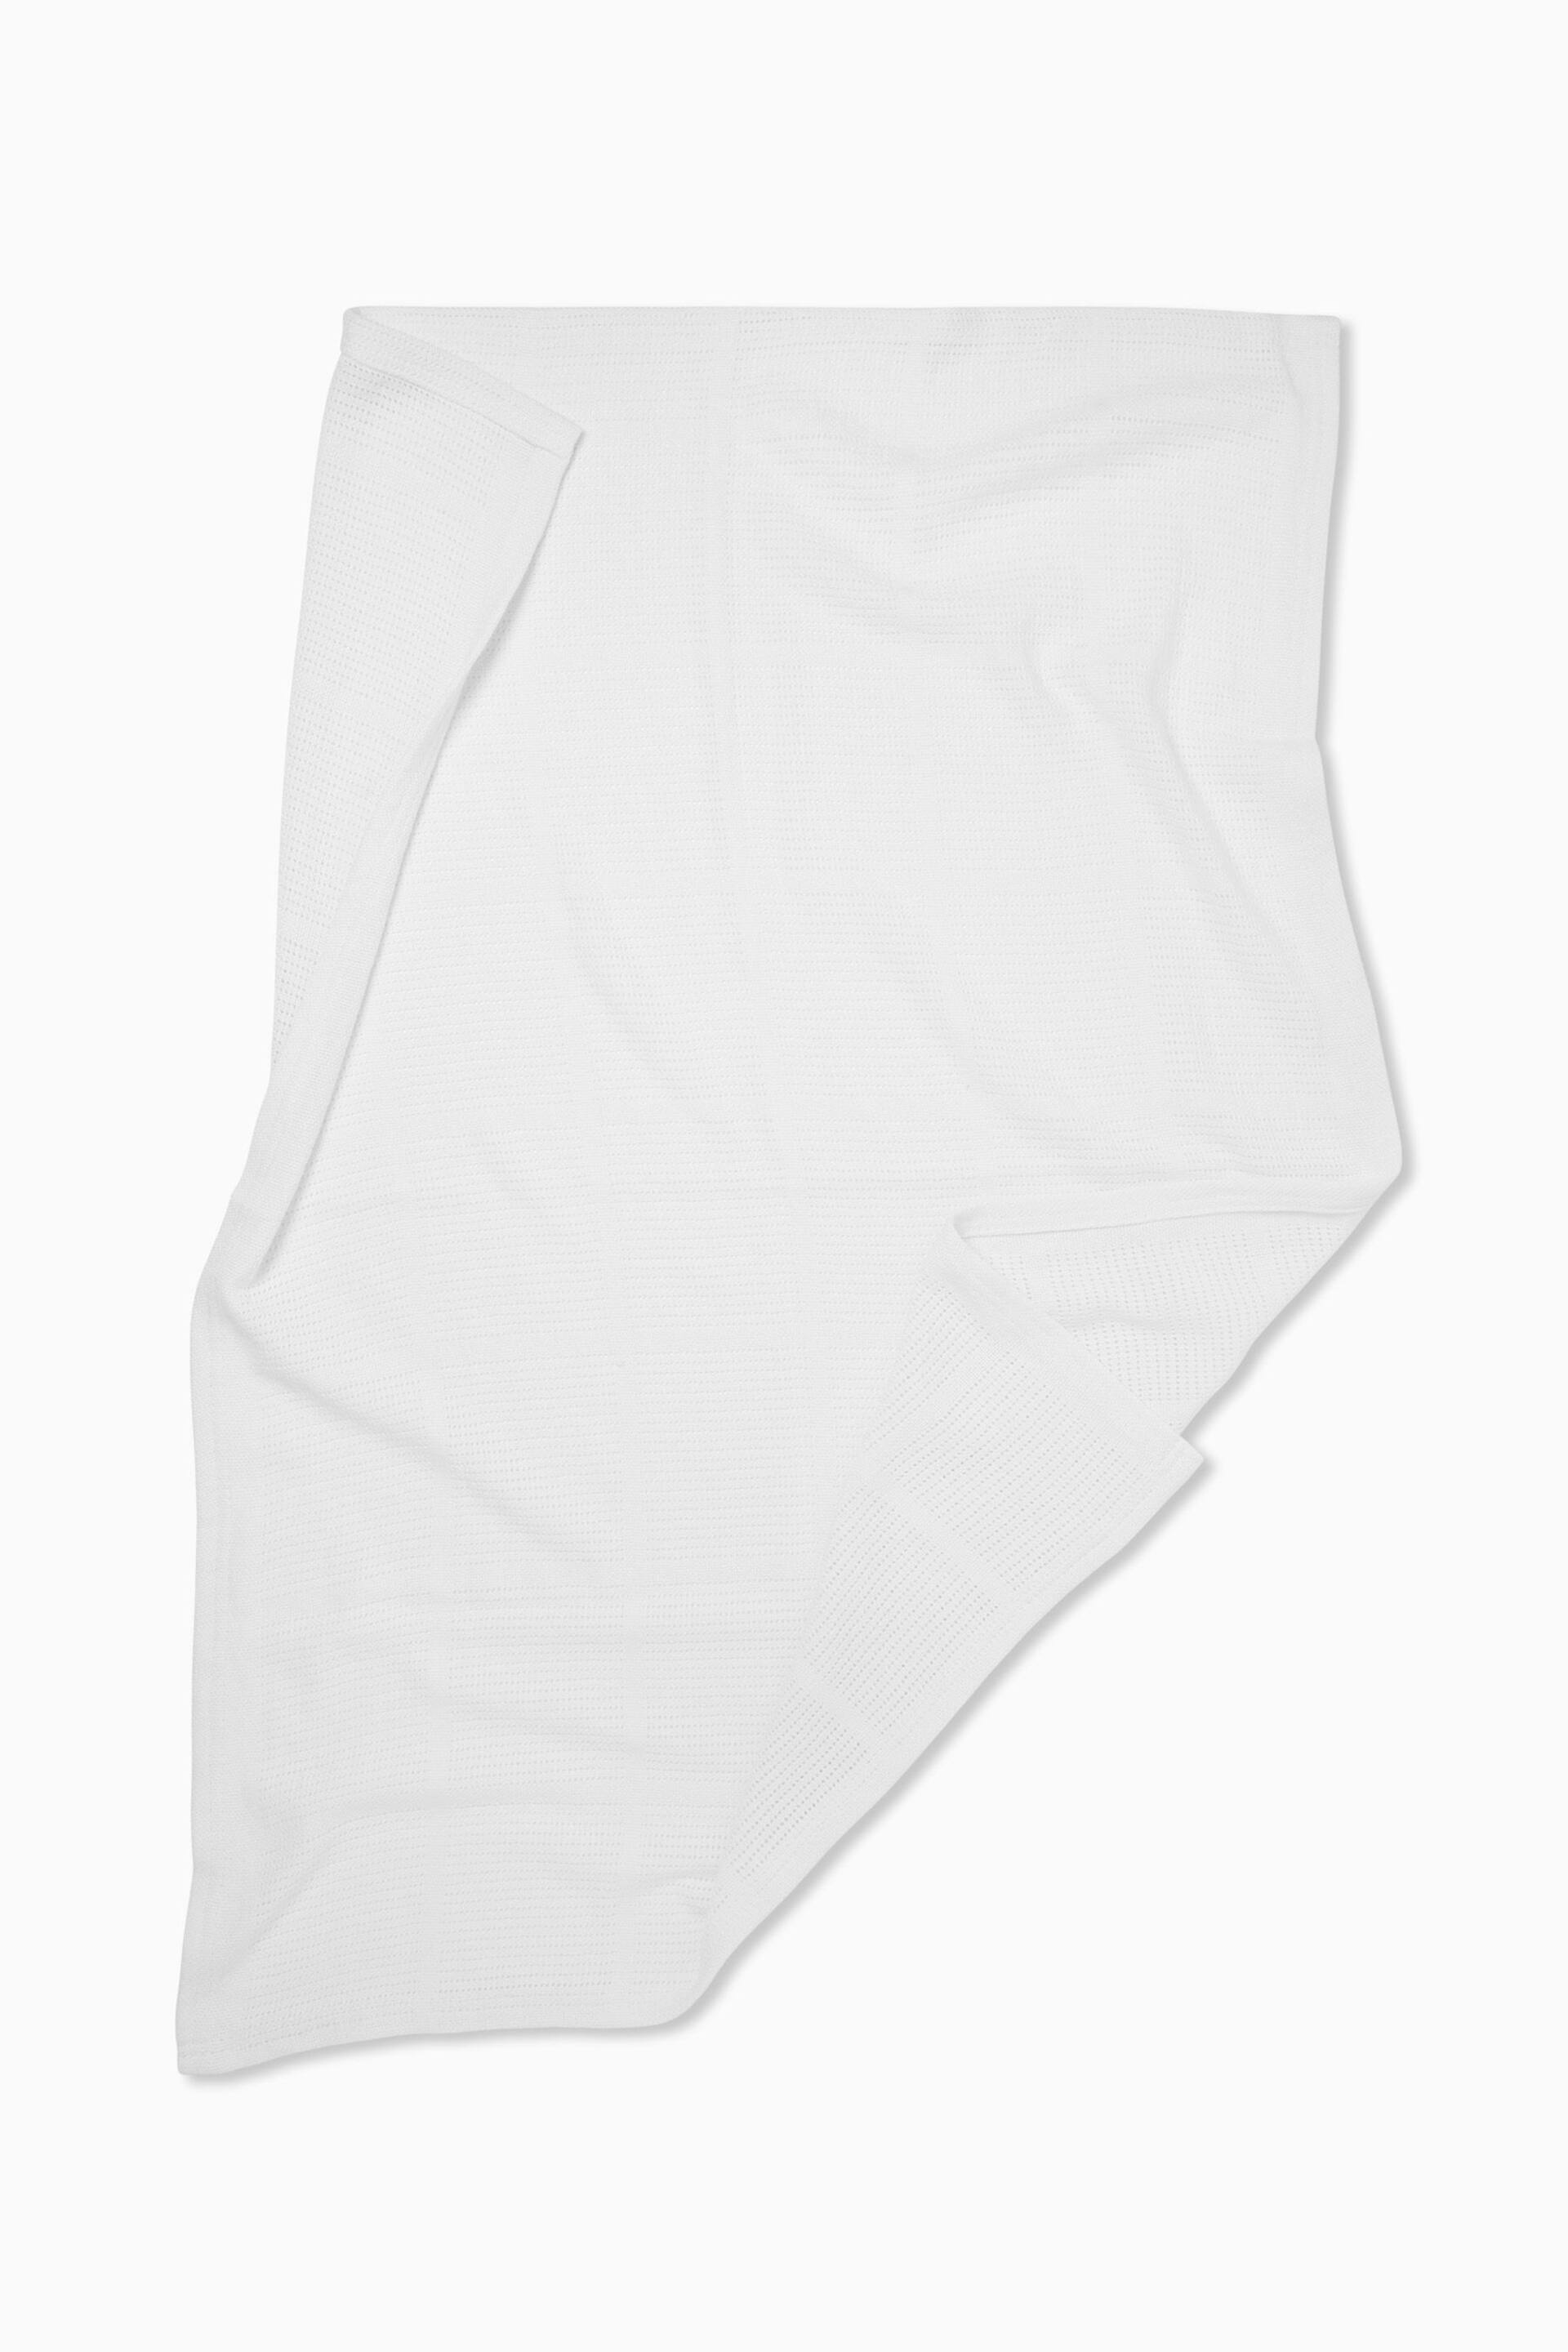 MORI White Soft Cotton & Bamboo Cellular Baby Blanket - Image 2 of 4